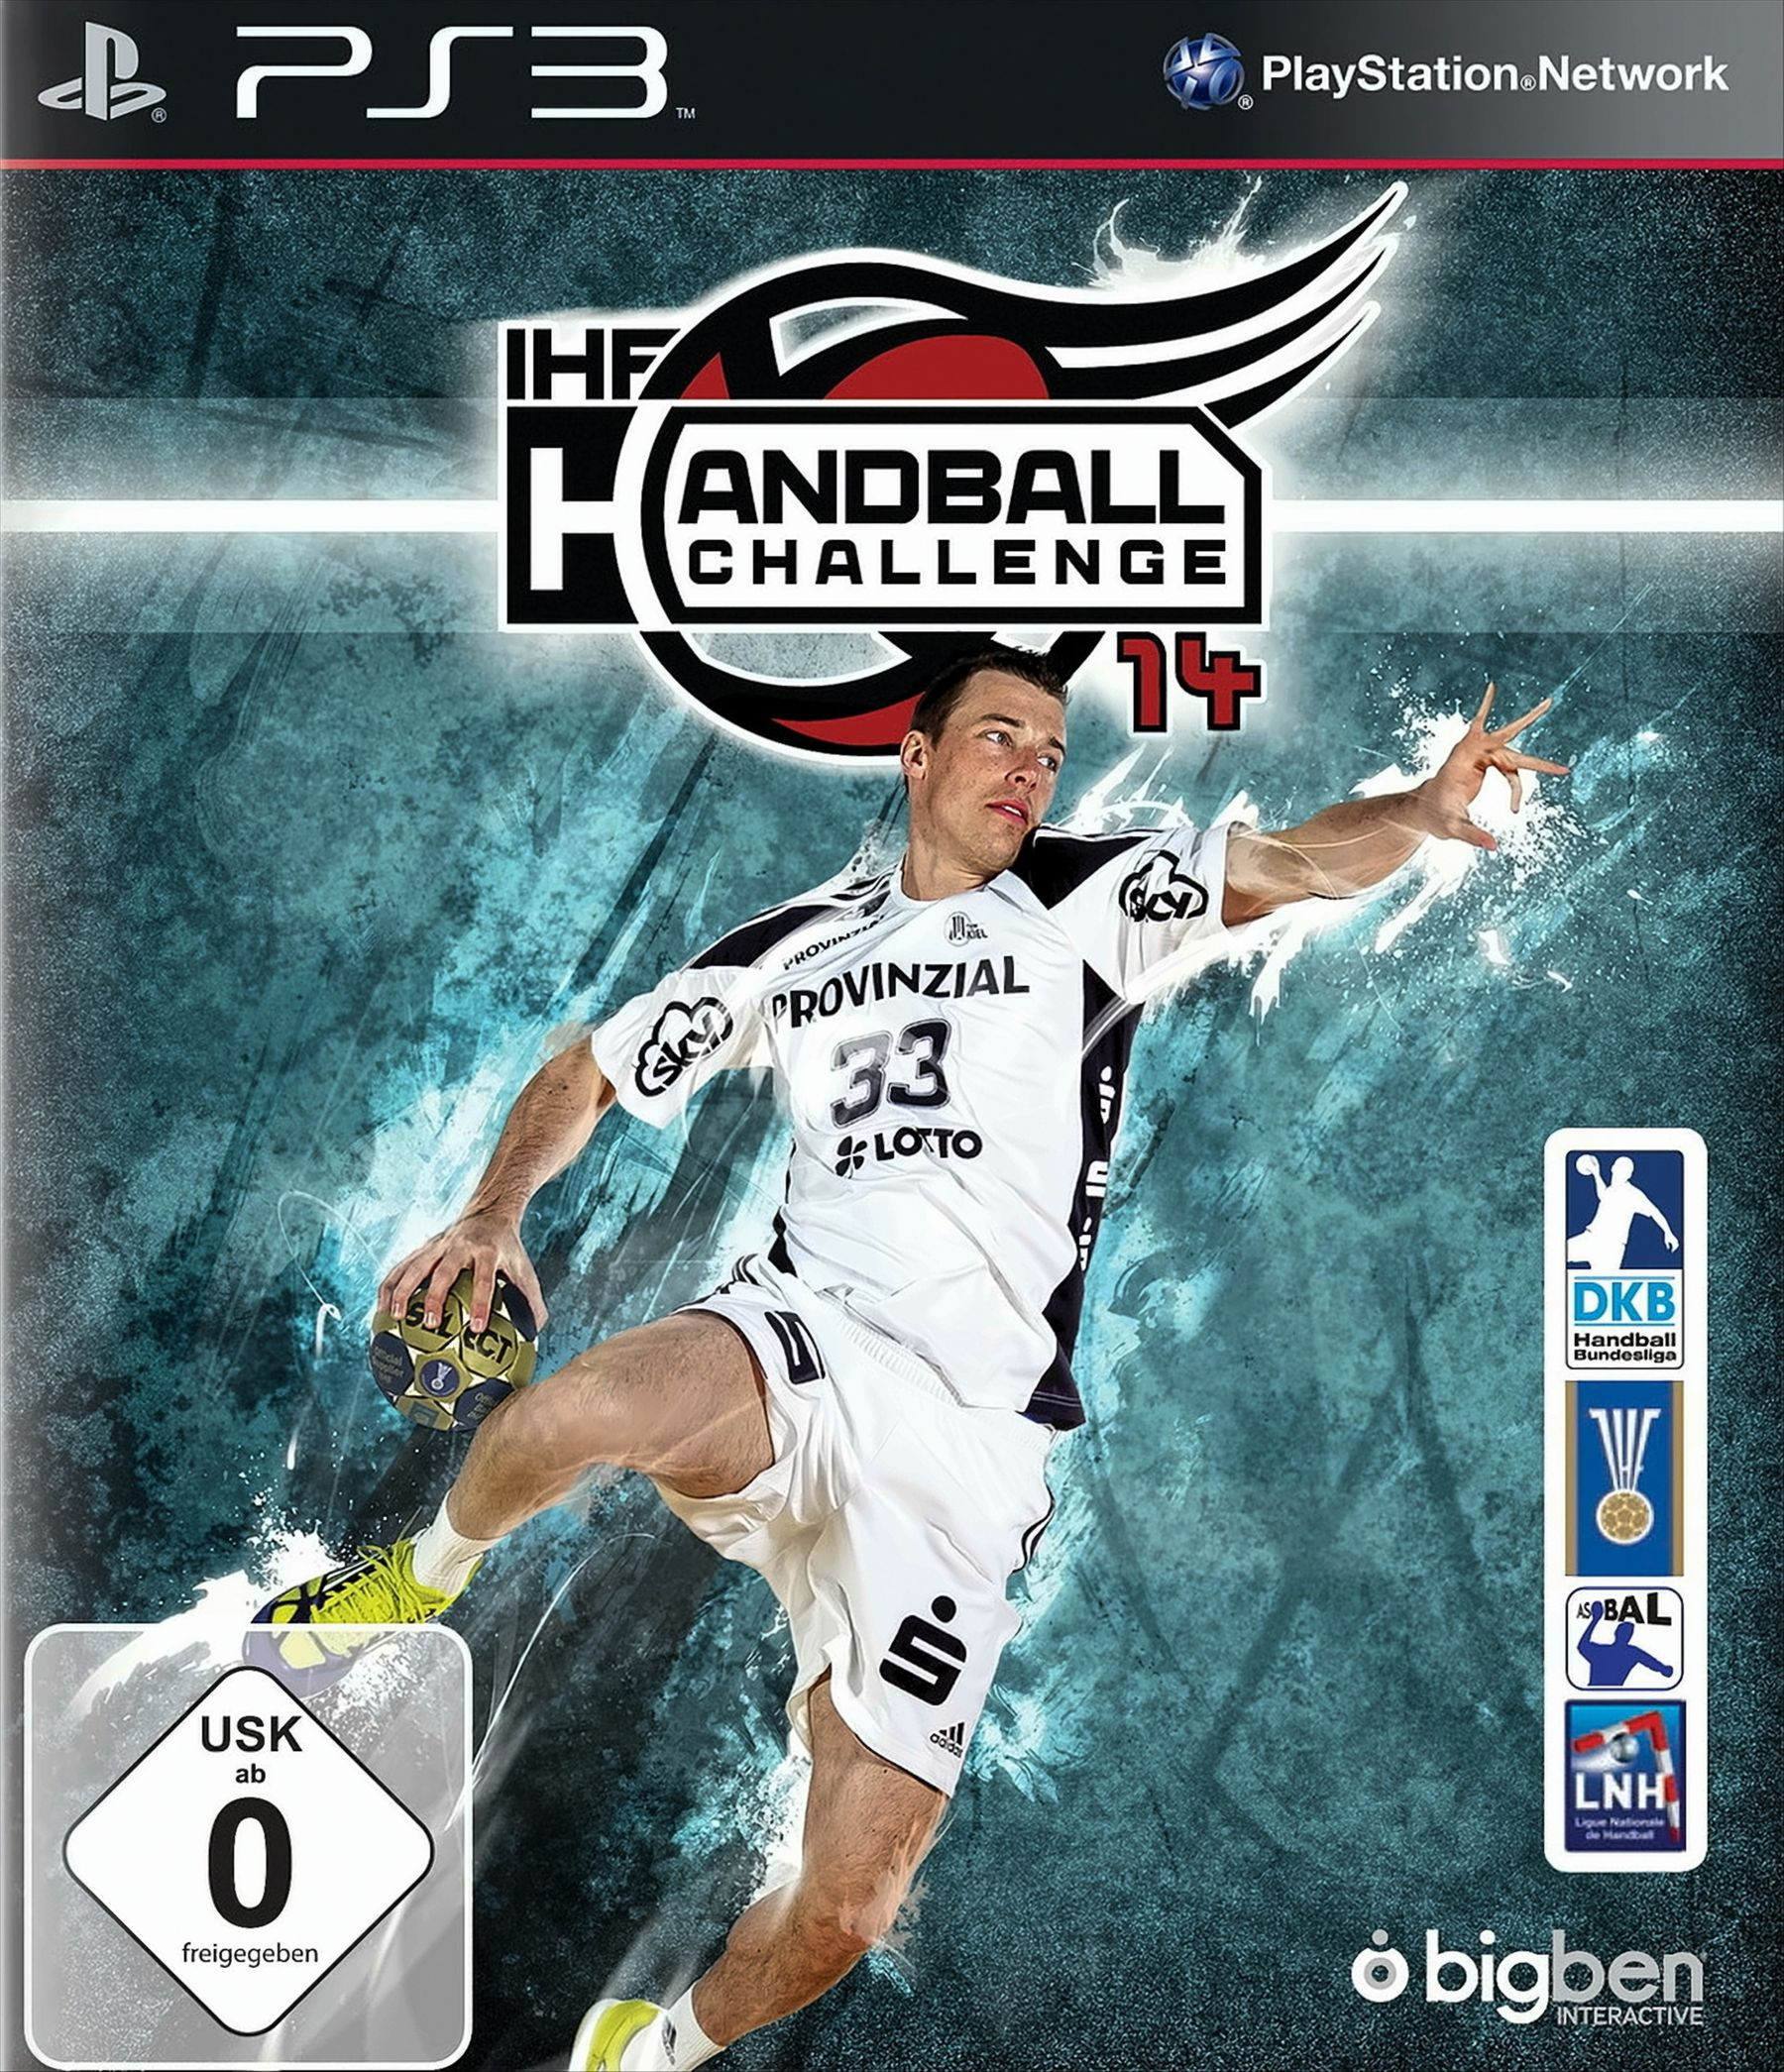 IHF Handball Challenge 14 PS3 - 3] [PlayStation